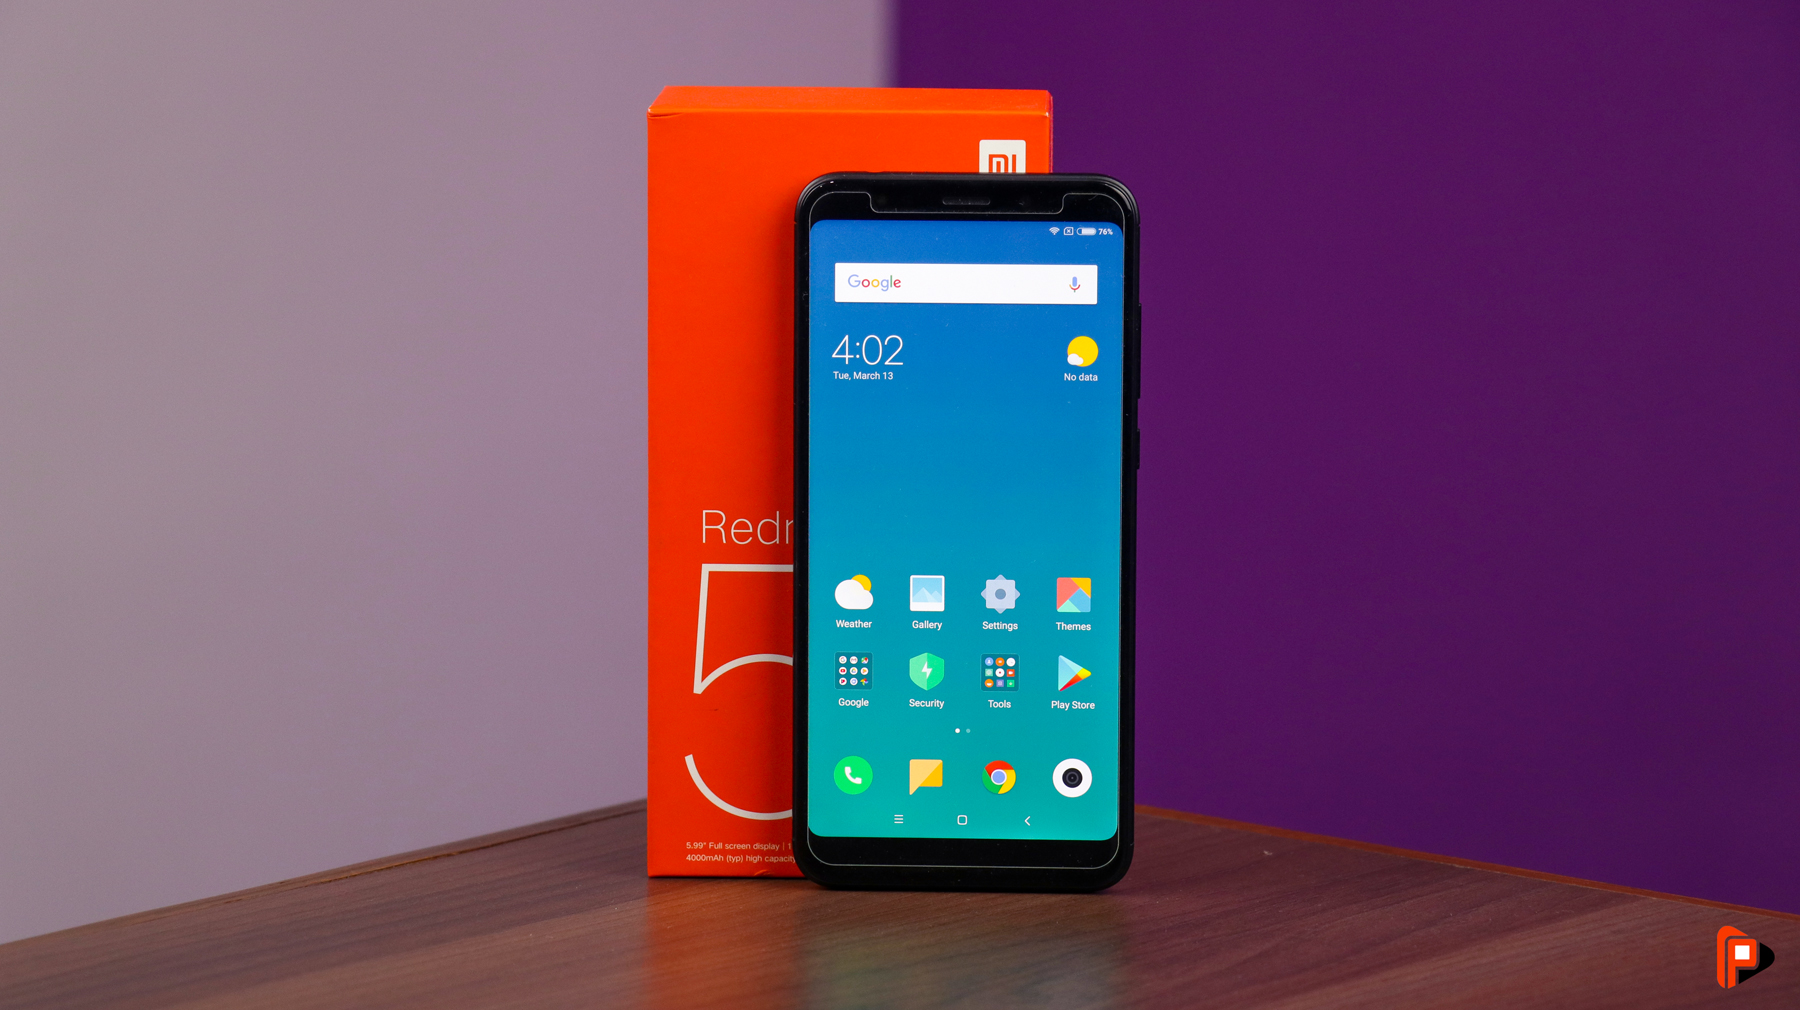 Xiaomi Redmi 5 Plus: Initial Impression and Review-Phones-In-Nepal-Xiaomi-Redmi-5-Plus-price-in-nepal